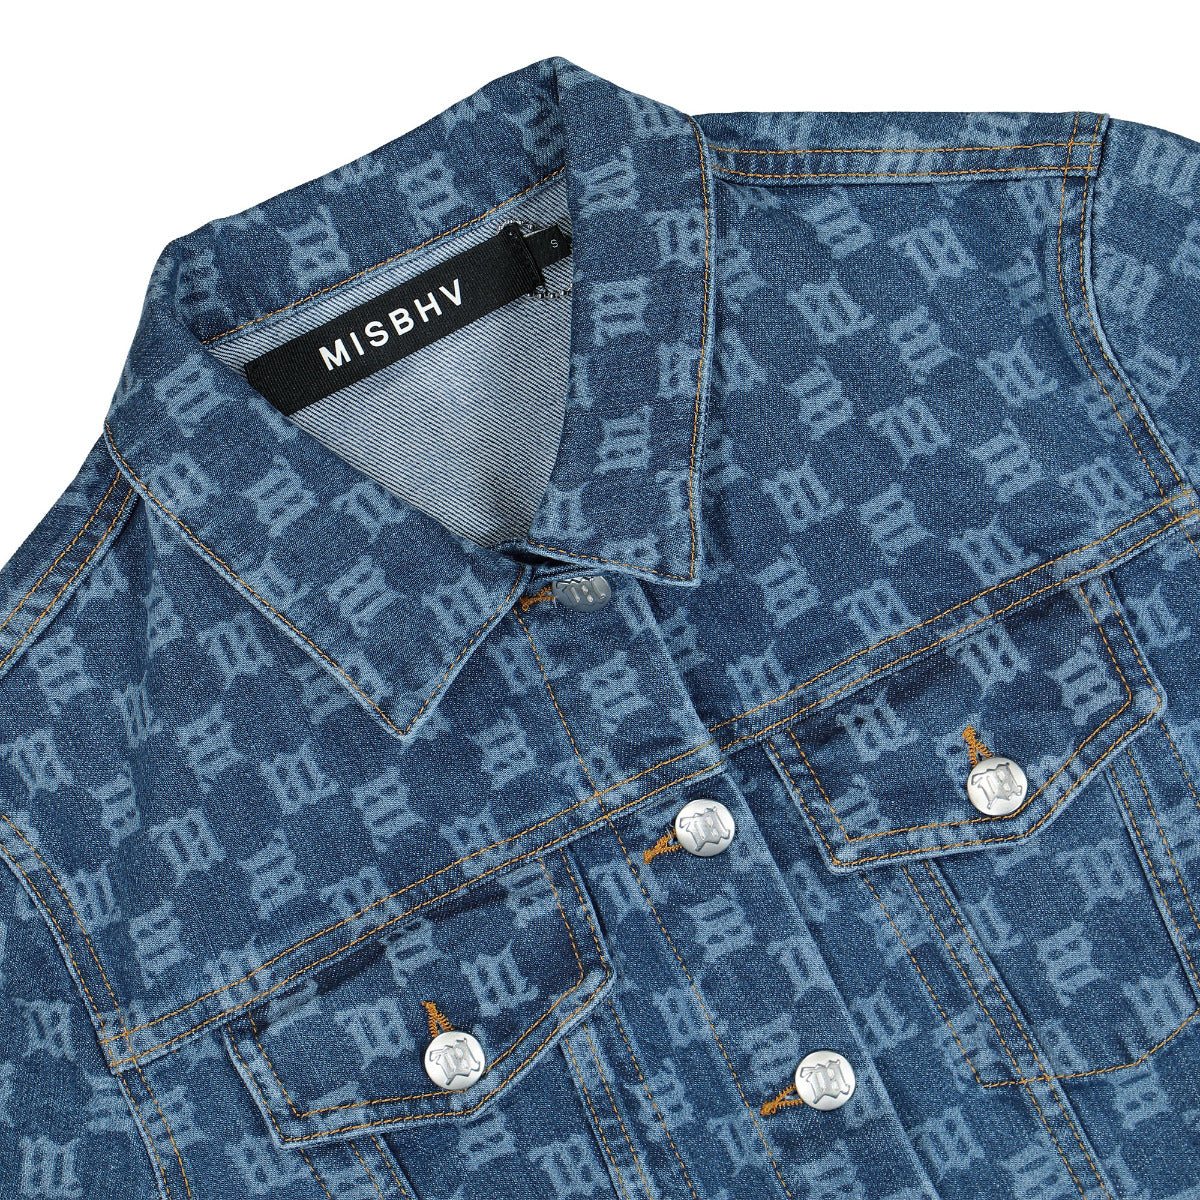 Louis Vuitton Luxury Repurposed Denim Jacket